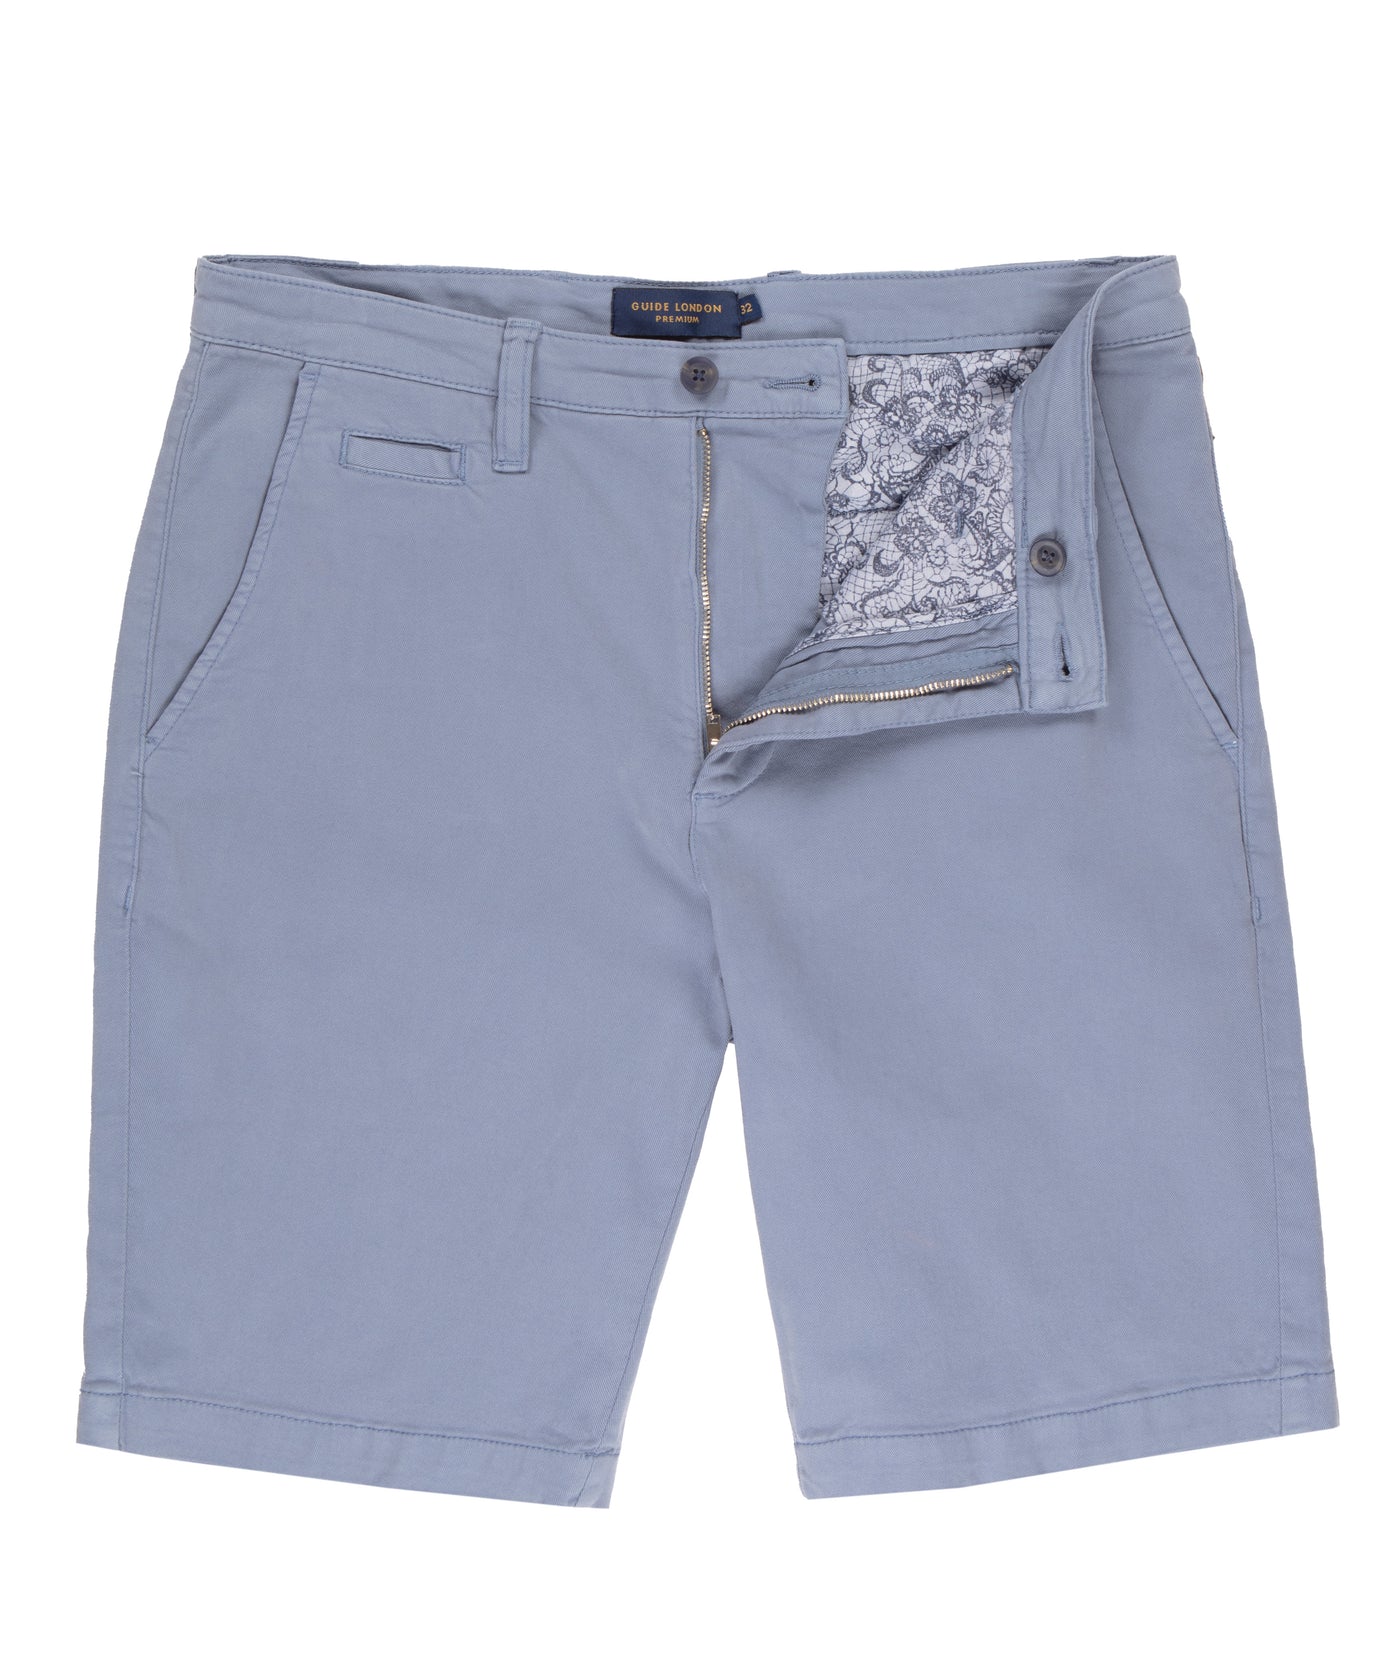 Summer Vibes: Stylish Chino Shorts for Men